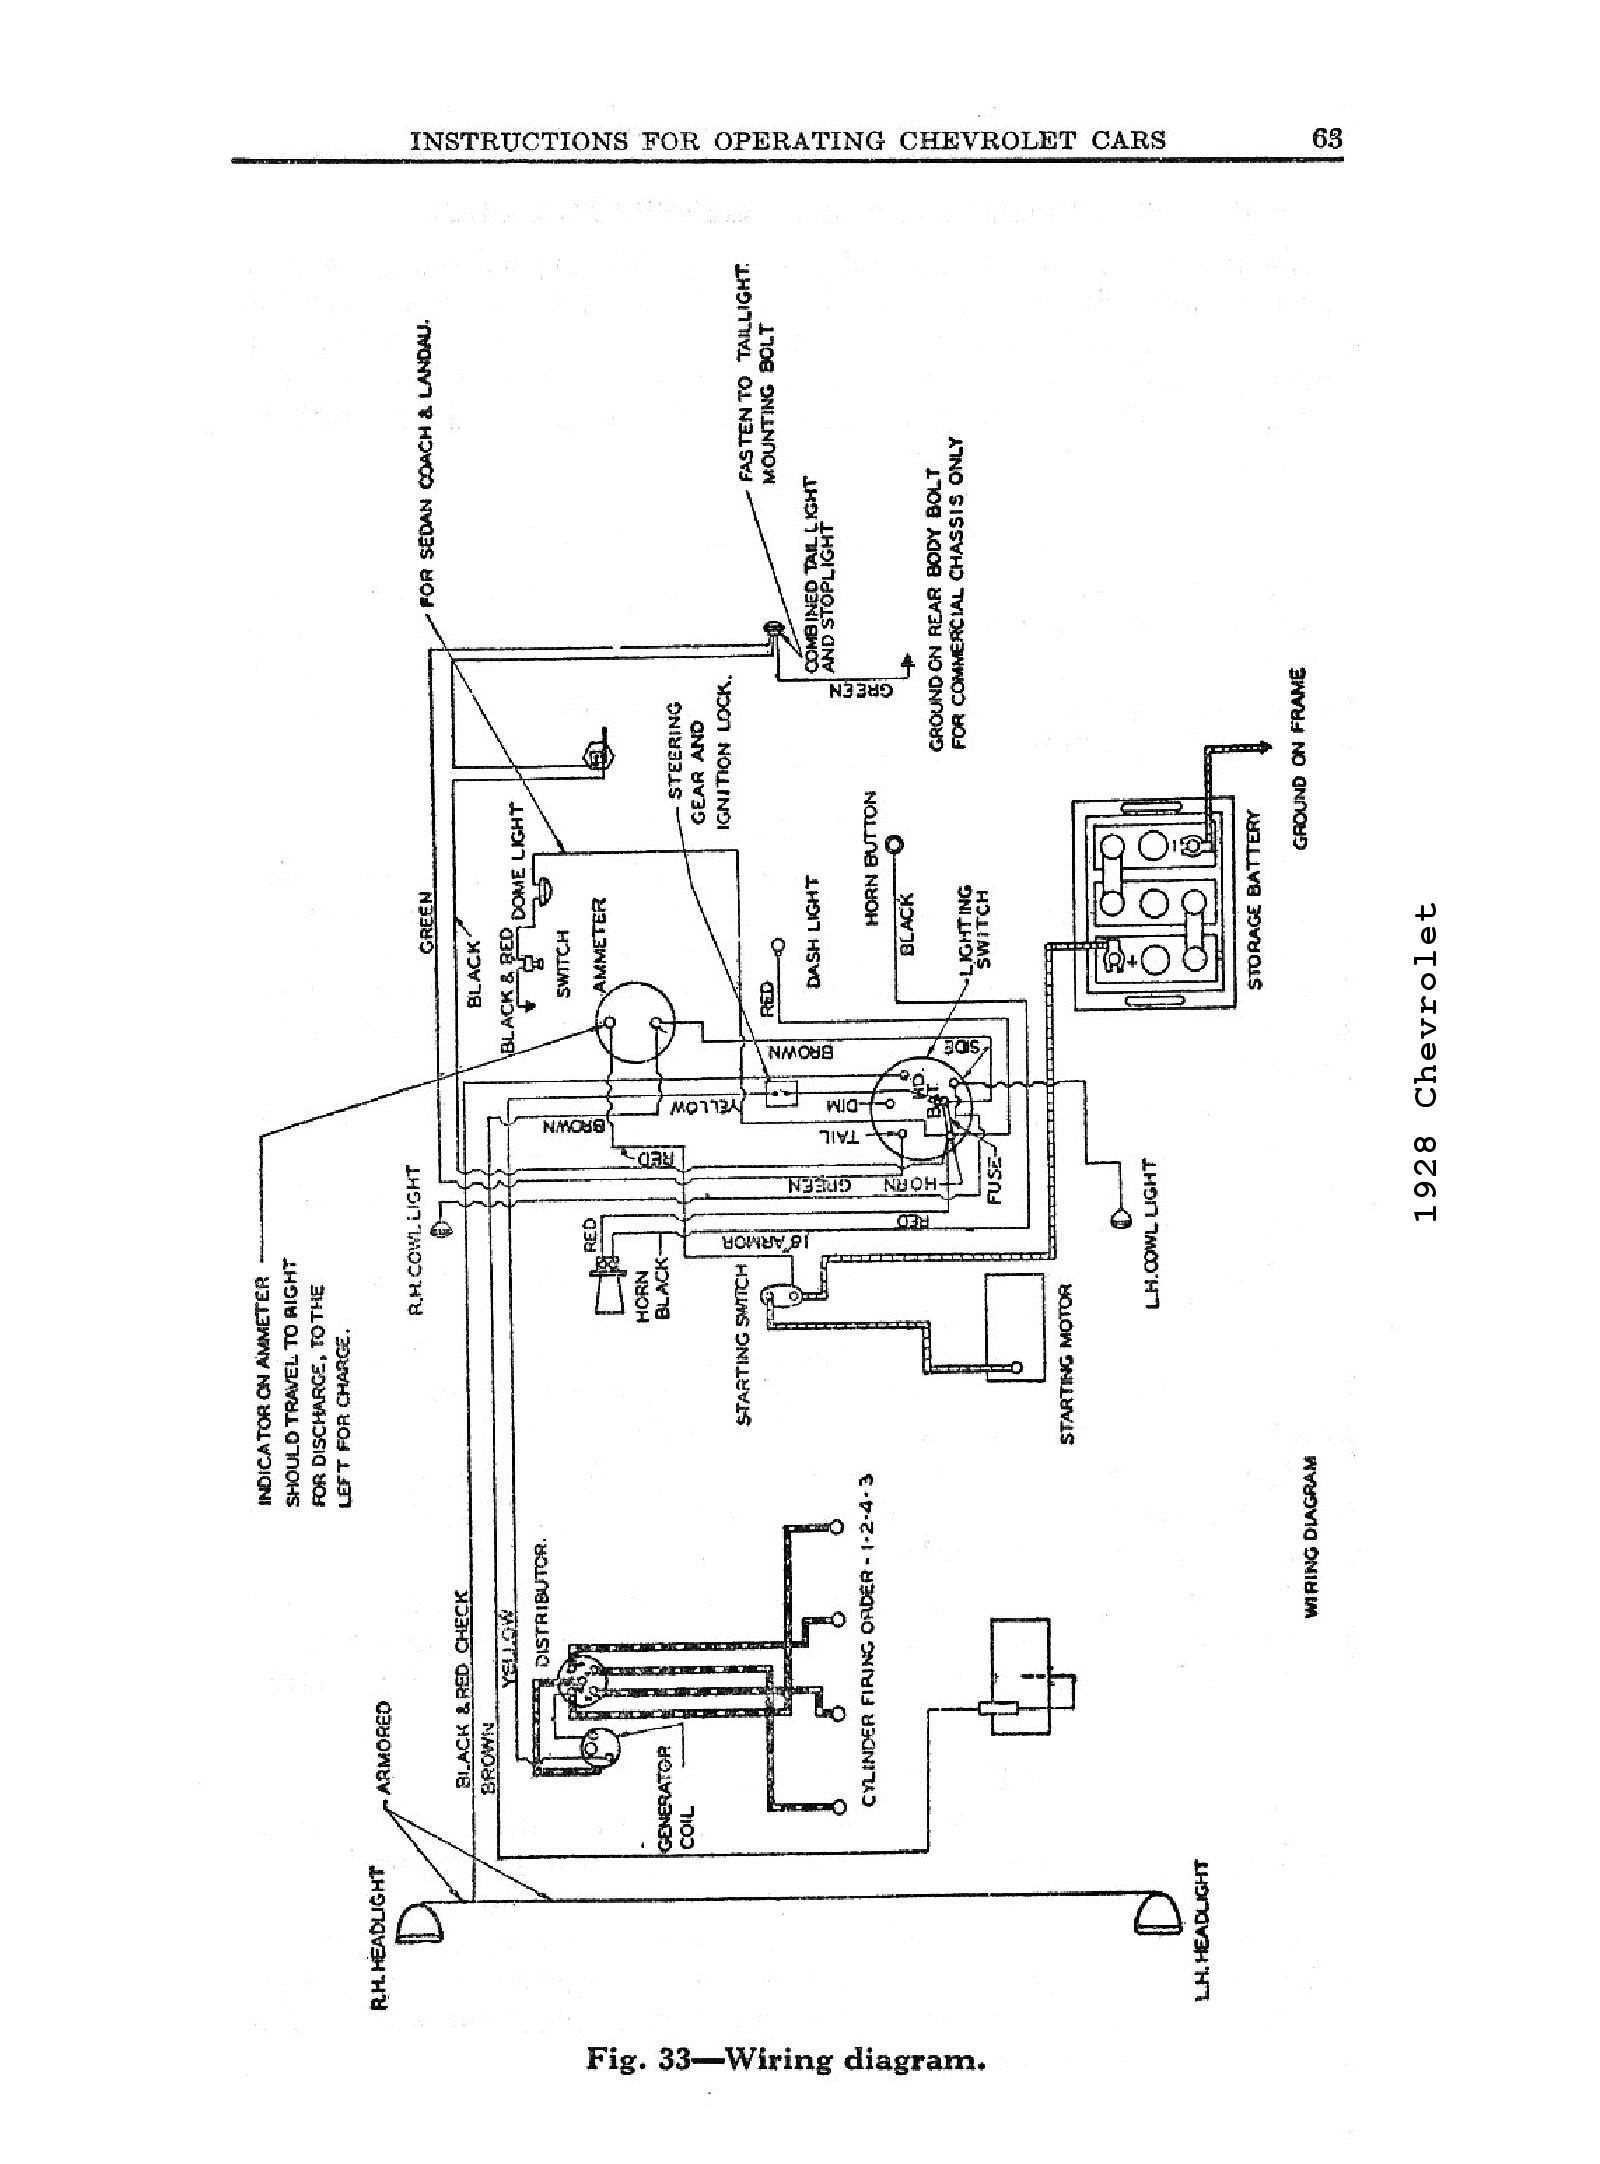 1963 Chevy Truck Wiring Diagram Chevy Wiring Diagrams Of 1963 Chevy Truck Wiring Diagram